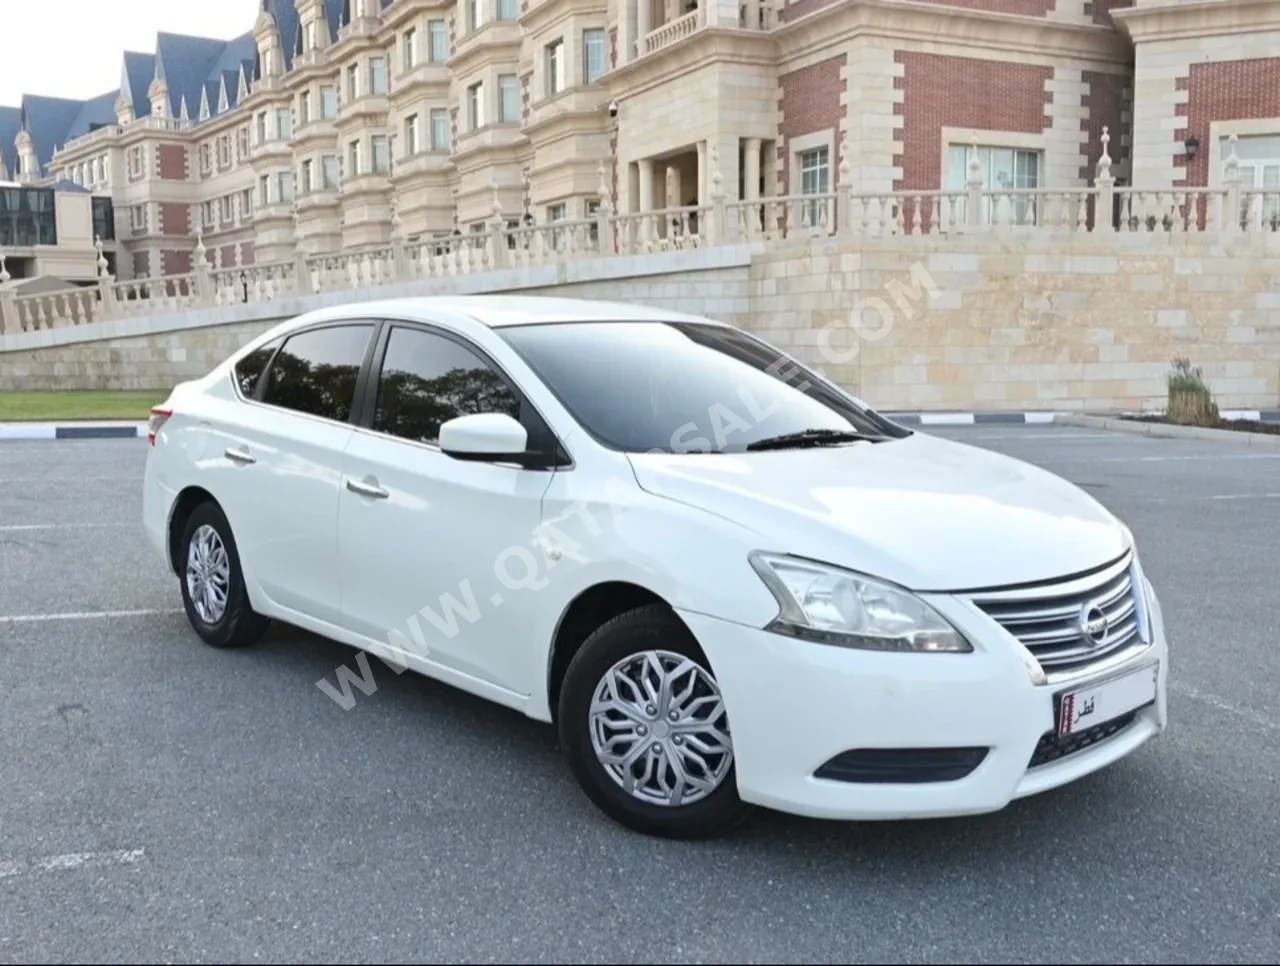 Nissan  Sentra  2014  Automatic  260,000 Km  4 Cylinder  SUV  White